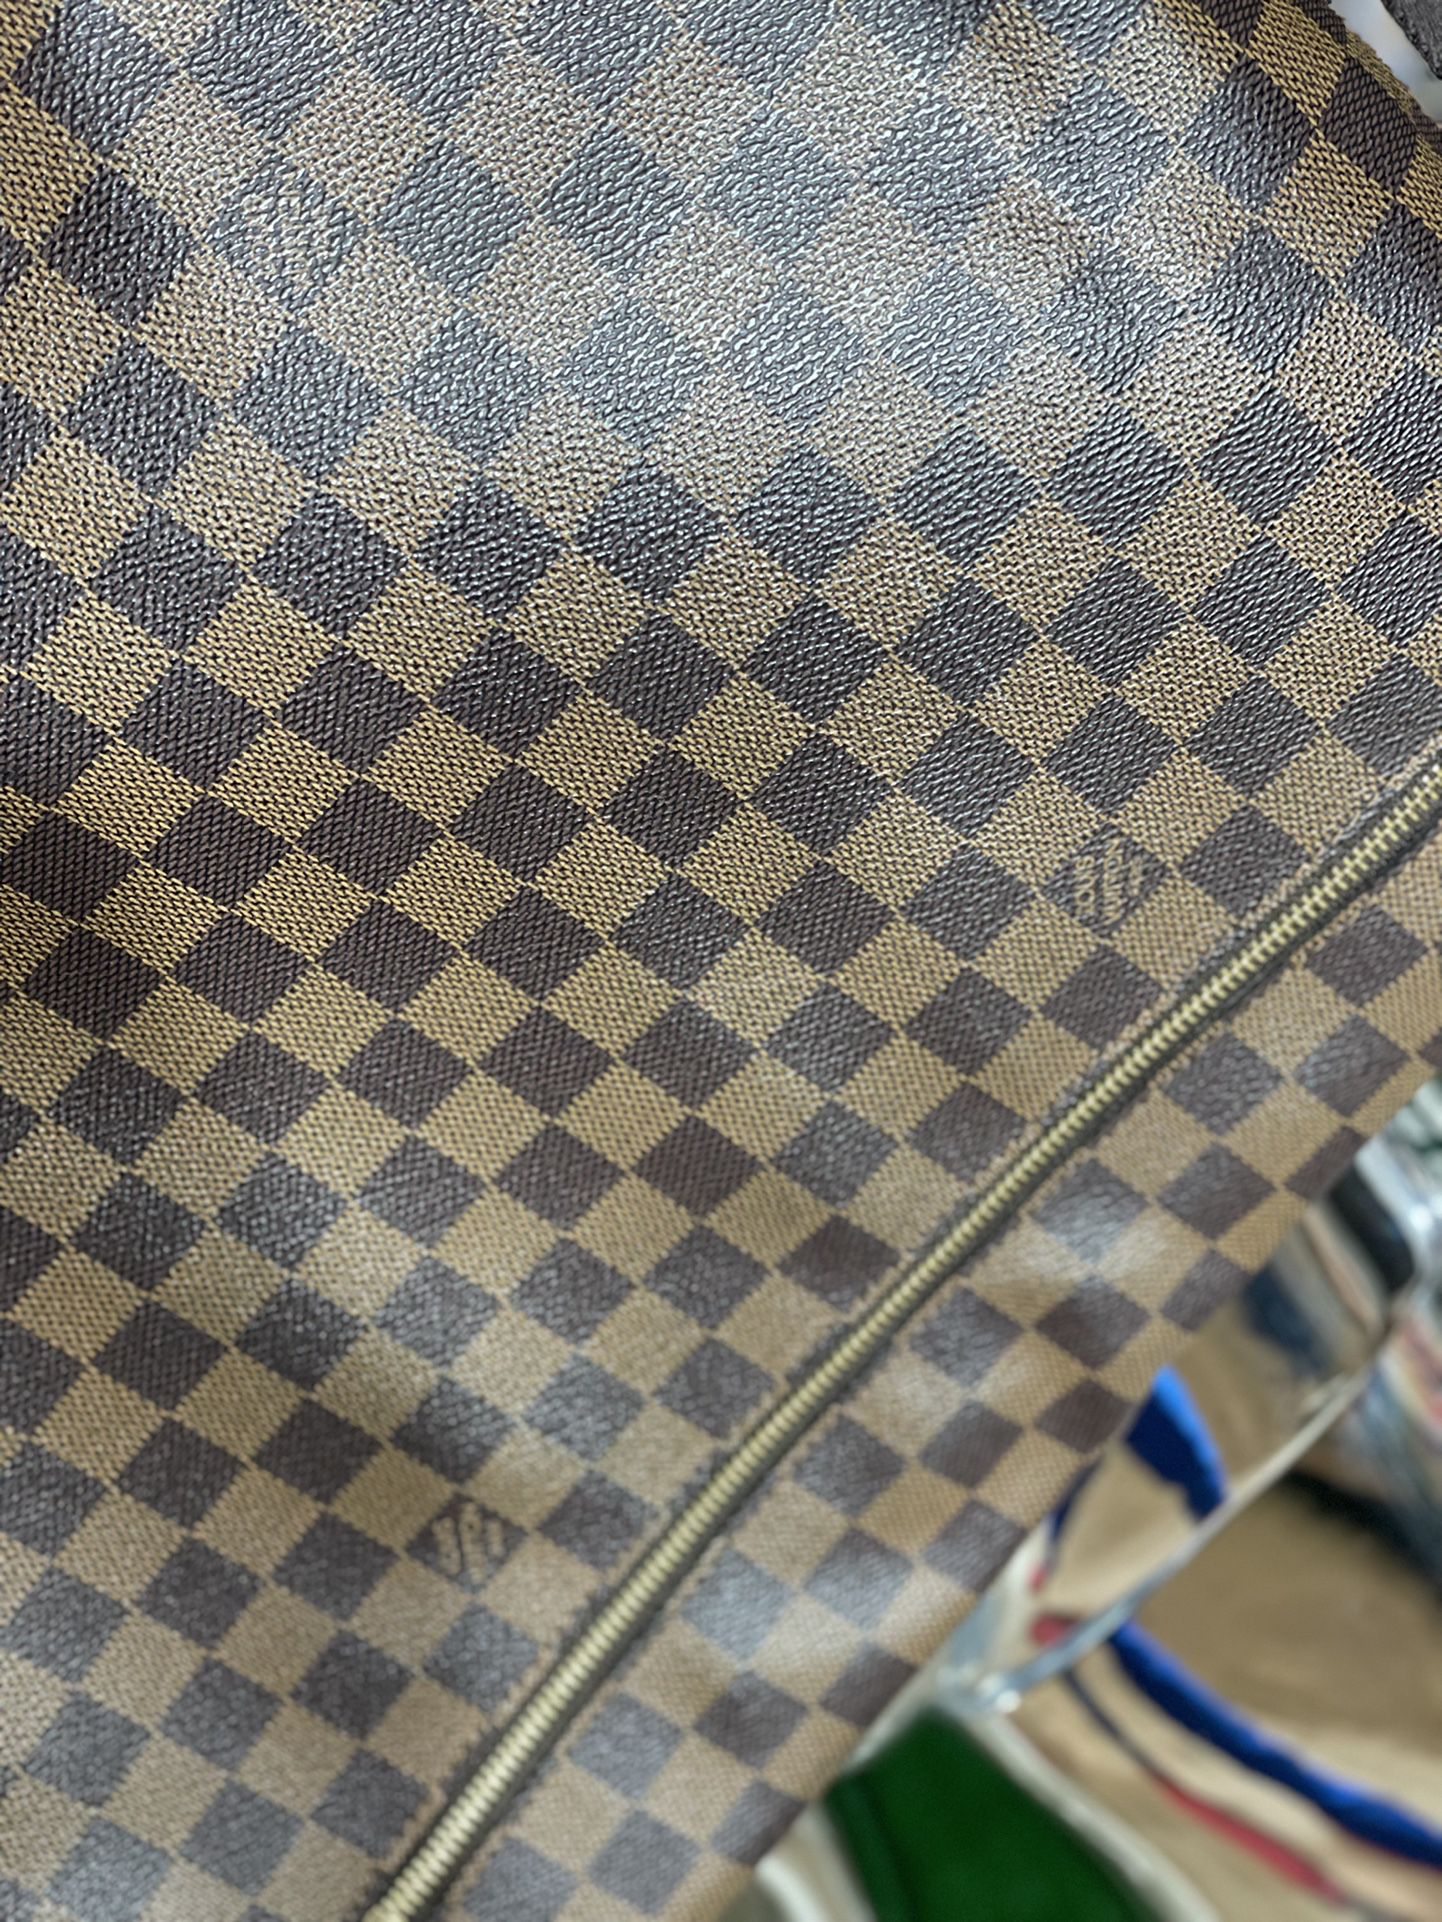 The Louis Vuitton Messenger bag